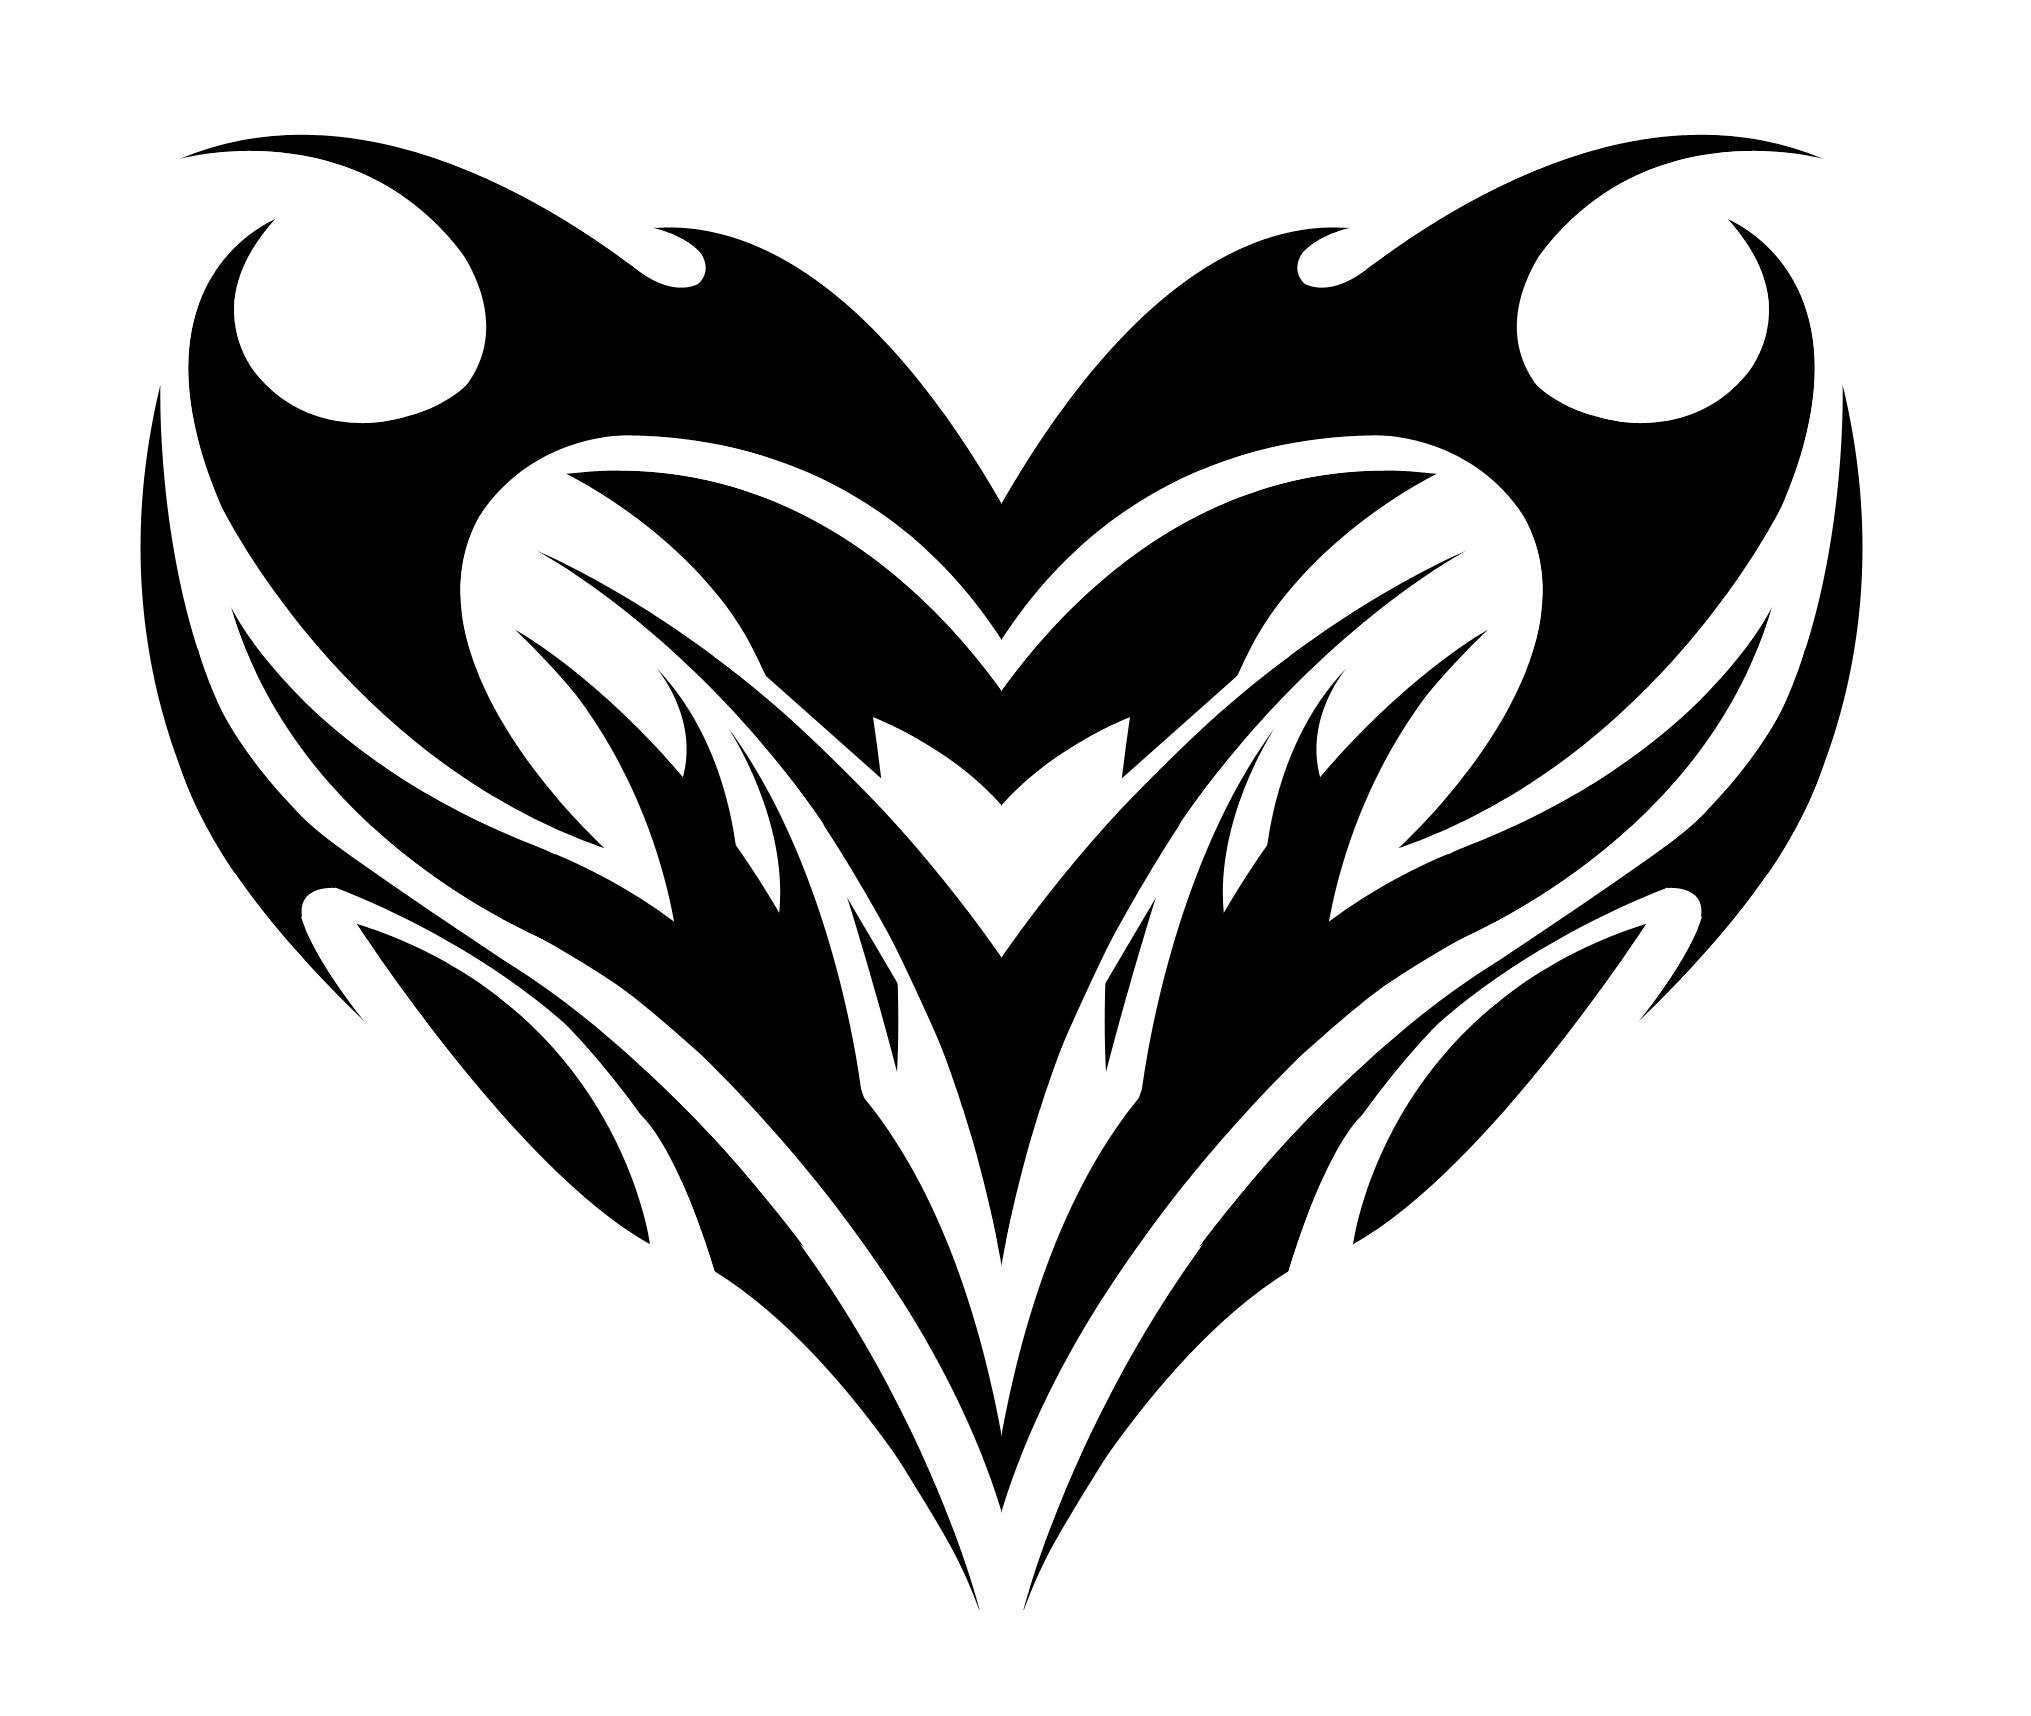 Cool heart designs.